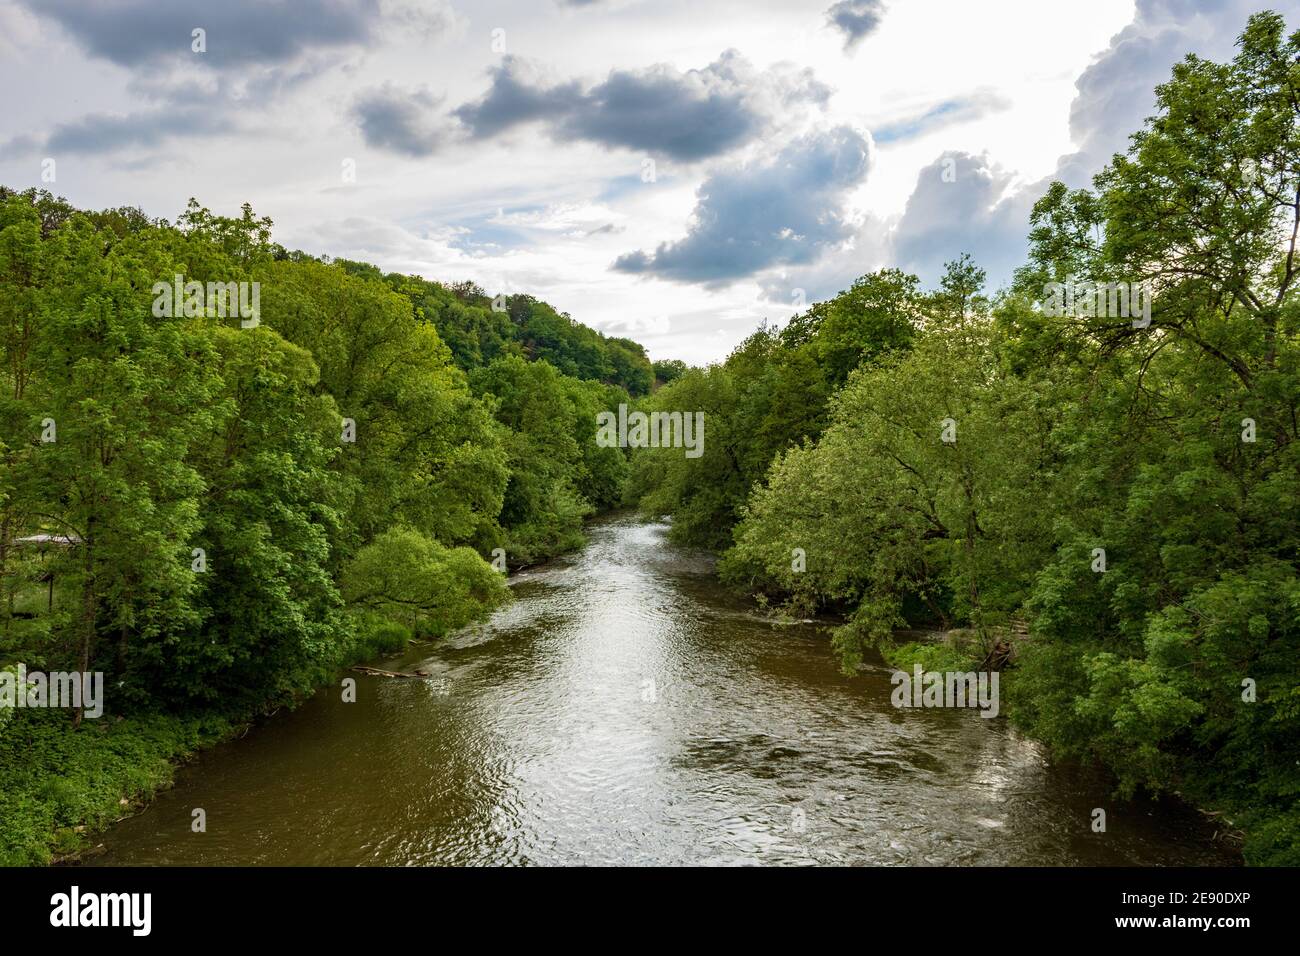 River Jagst flowing between trees with cloudy sky in Neudenau, Germany Stock Photo